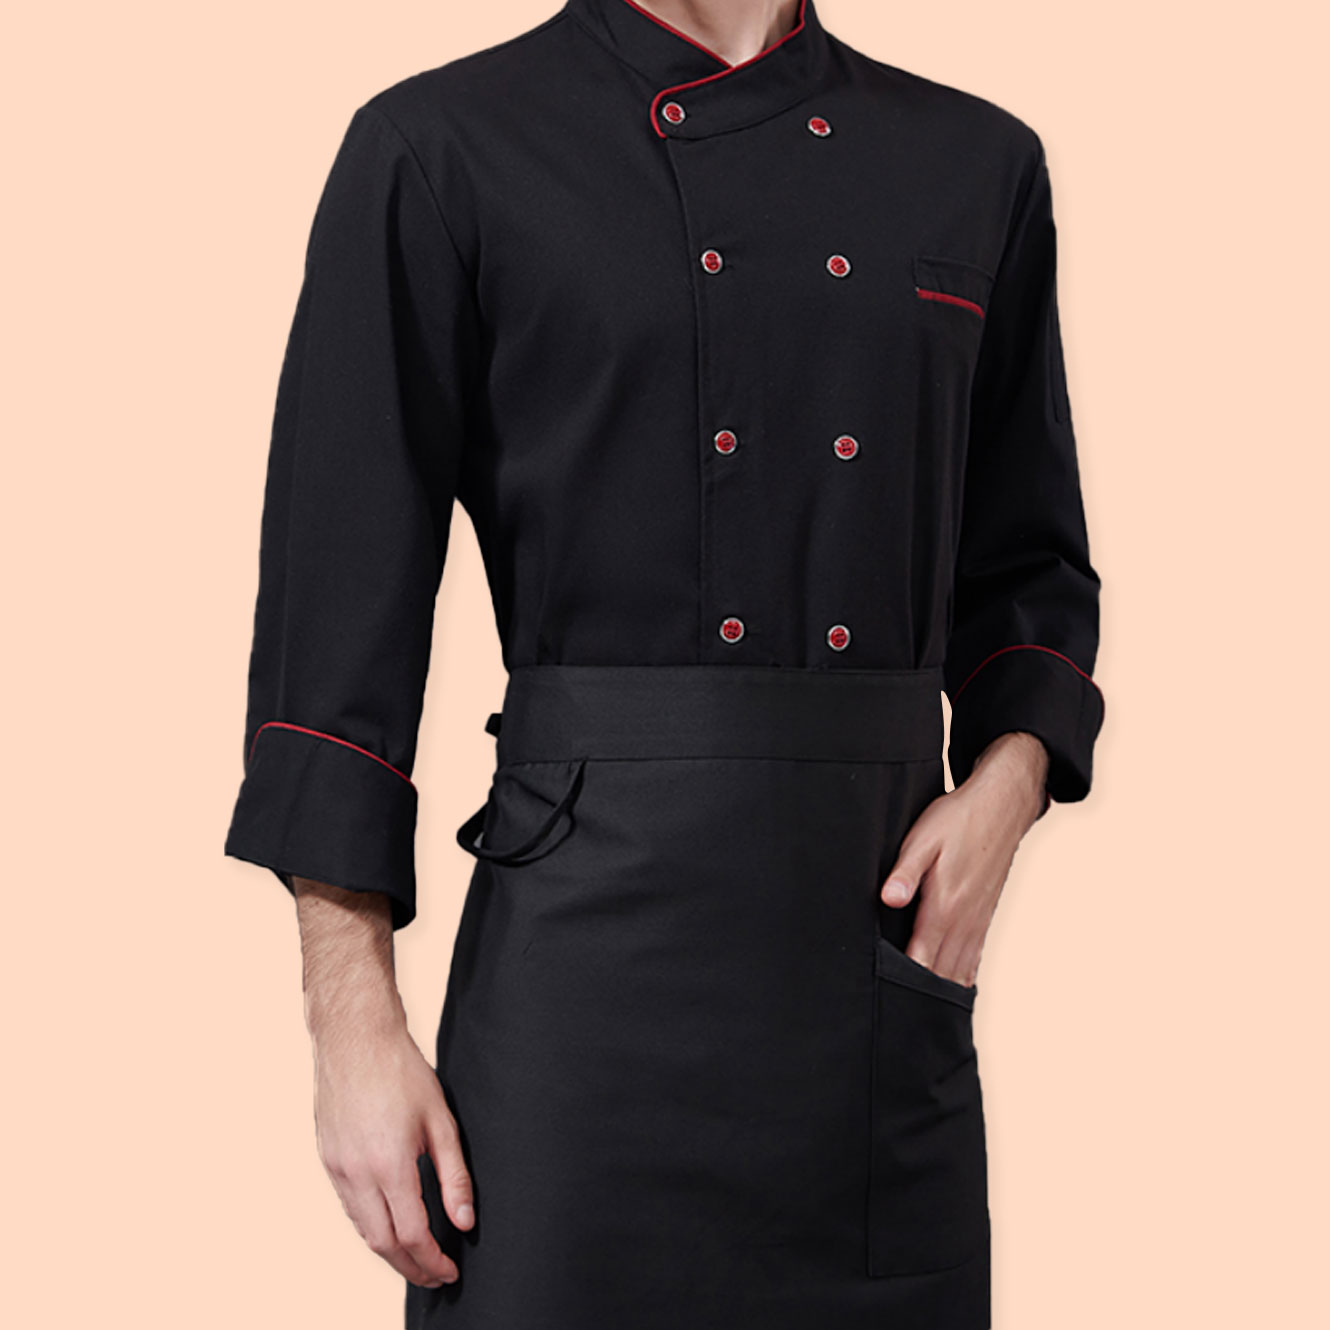 https://bigbanner.com.au/wp-content/uploads/2020/03/Chef-Uniforms-2.jpg